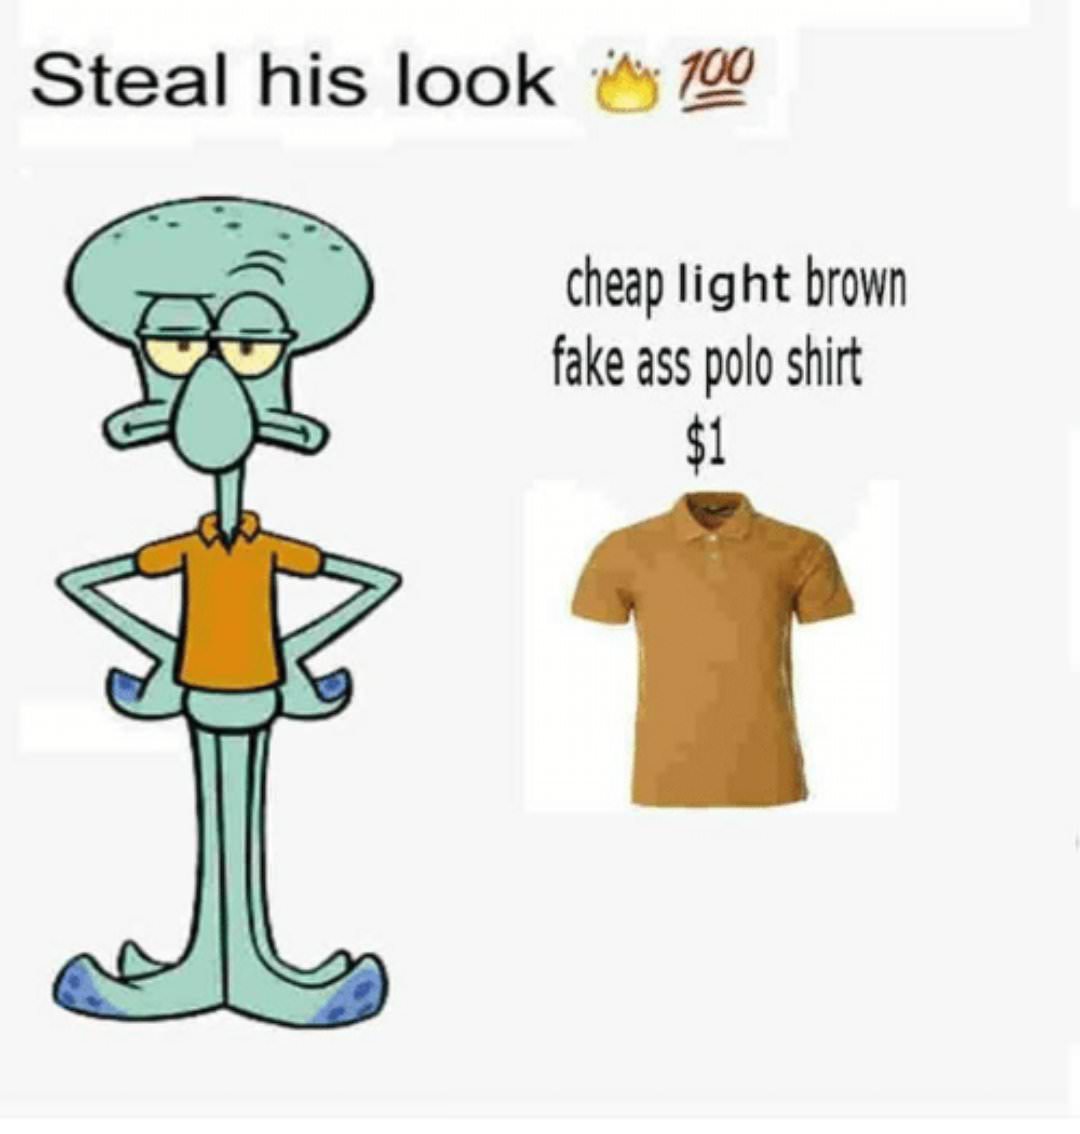 spongebob squarepants squidward - Steal his look is 100 cheap light brown fake ass polo shirt